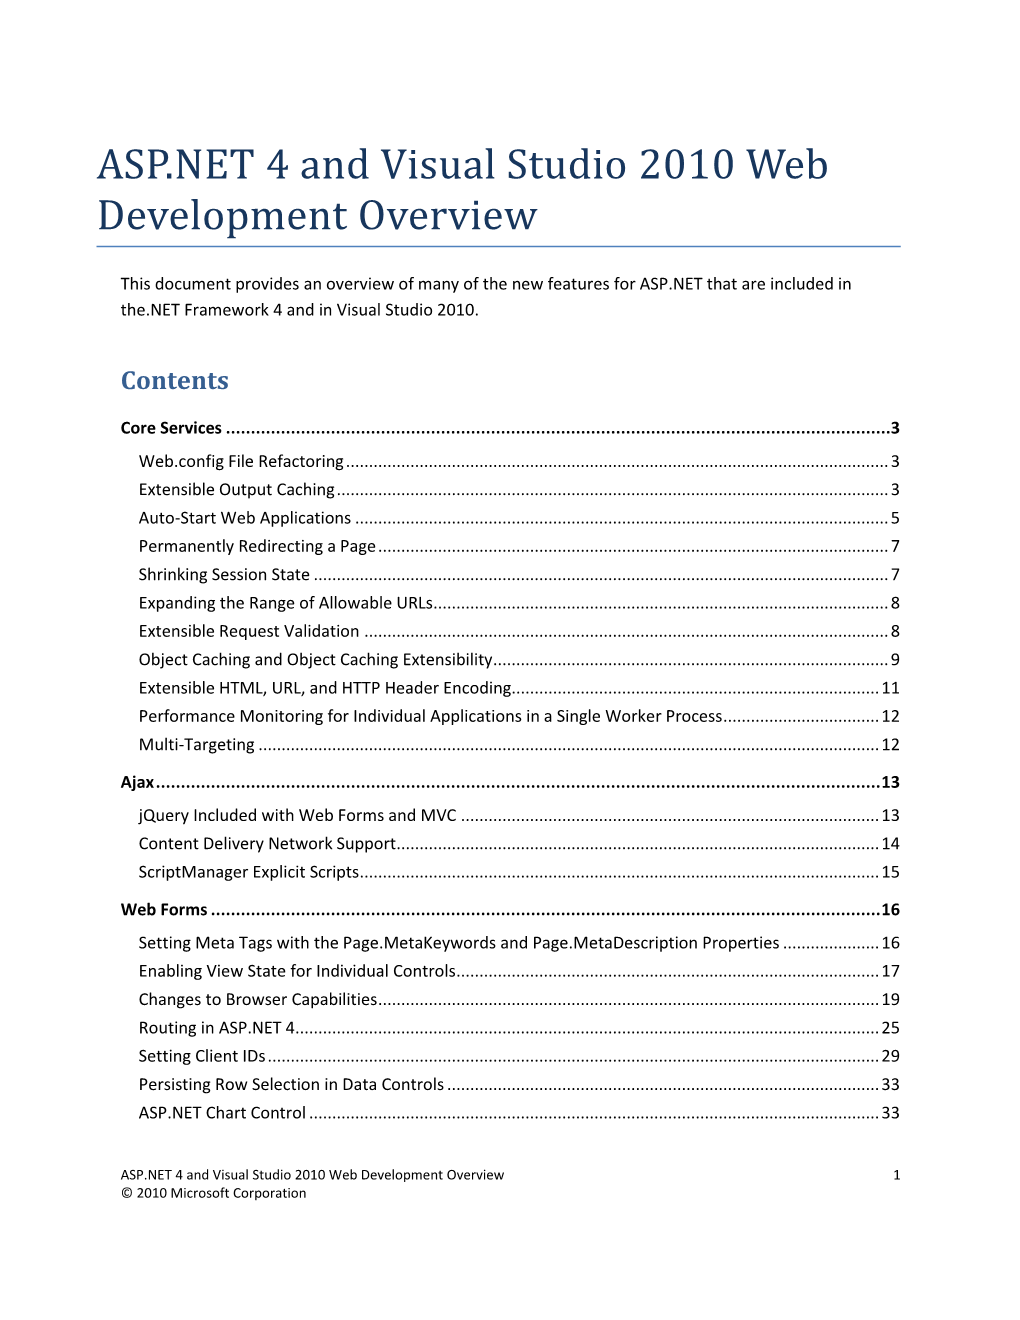 ASP.NET 4 and Visual Studio 2010 Web Development Overview